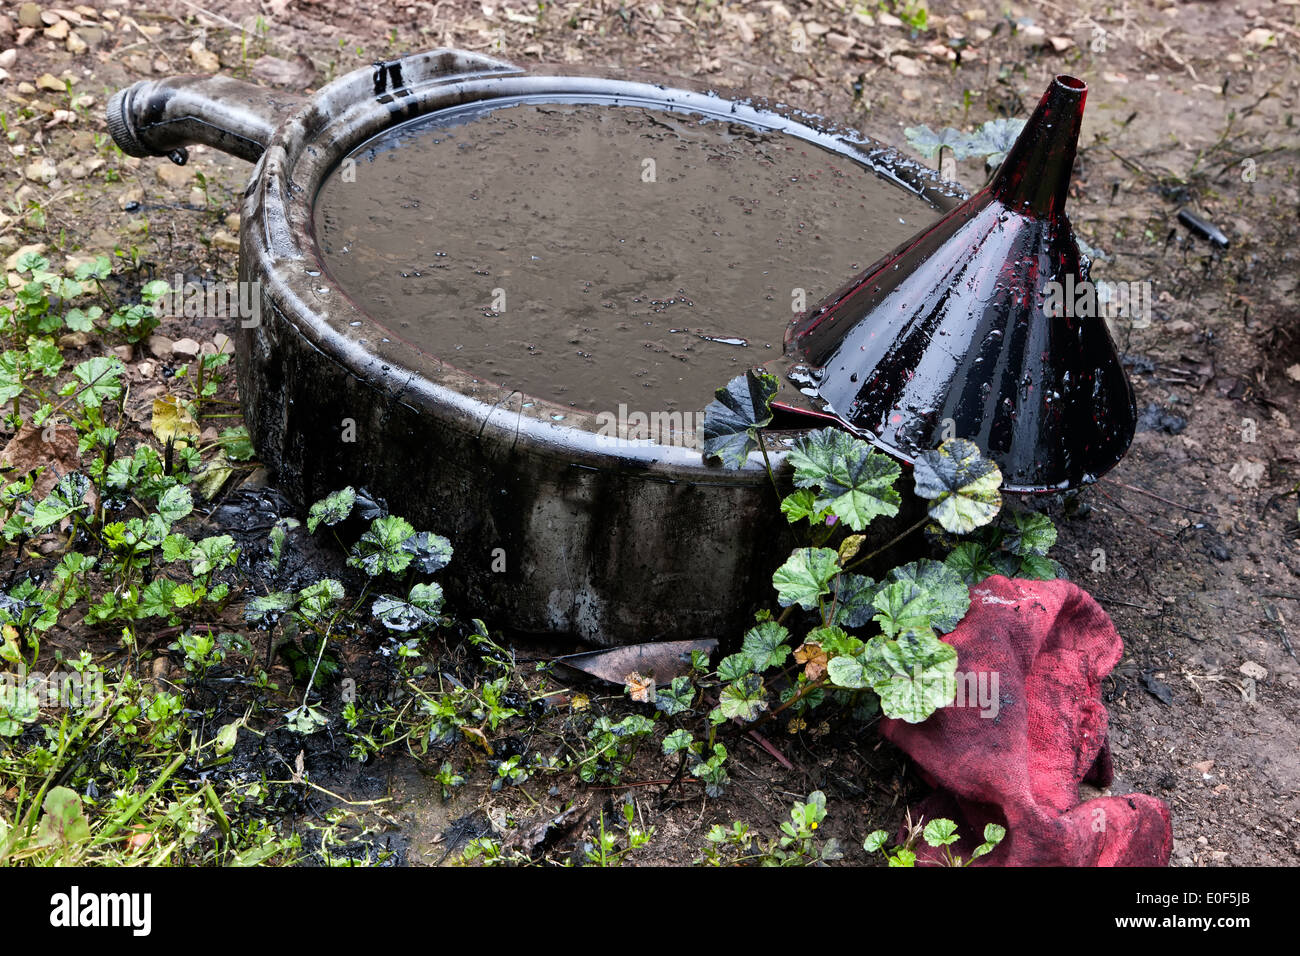 Ölablass pan mit schmutzigen Motoröl verschmutzen Boden & Flora. Stockfoto